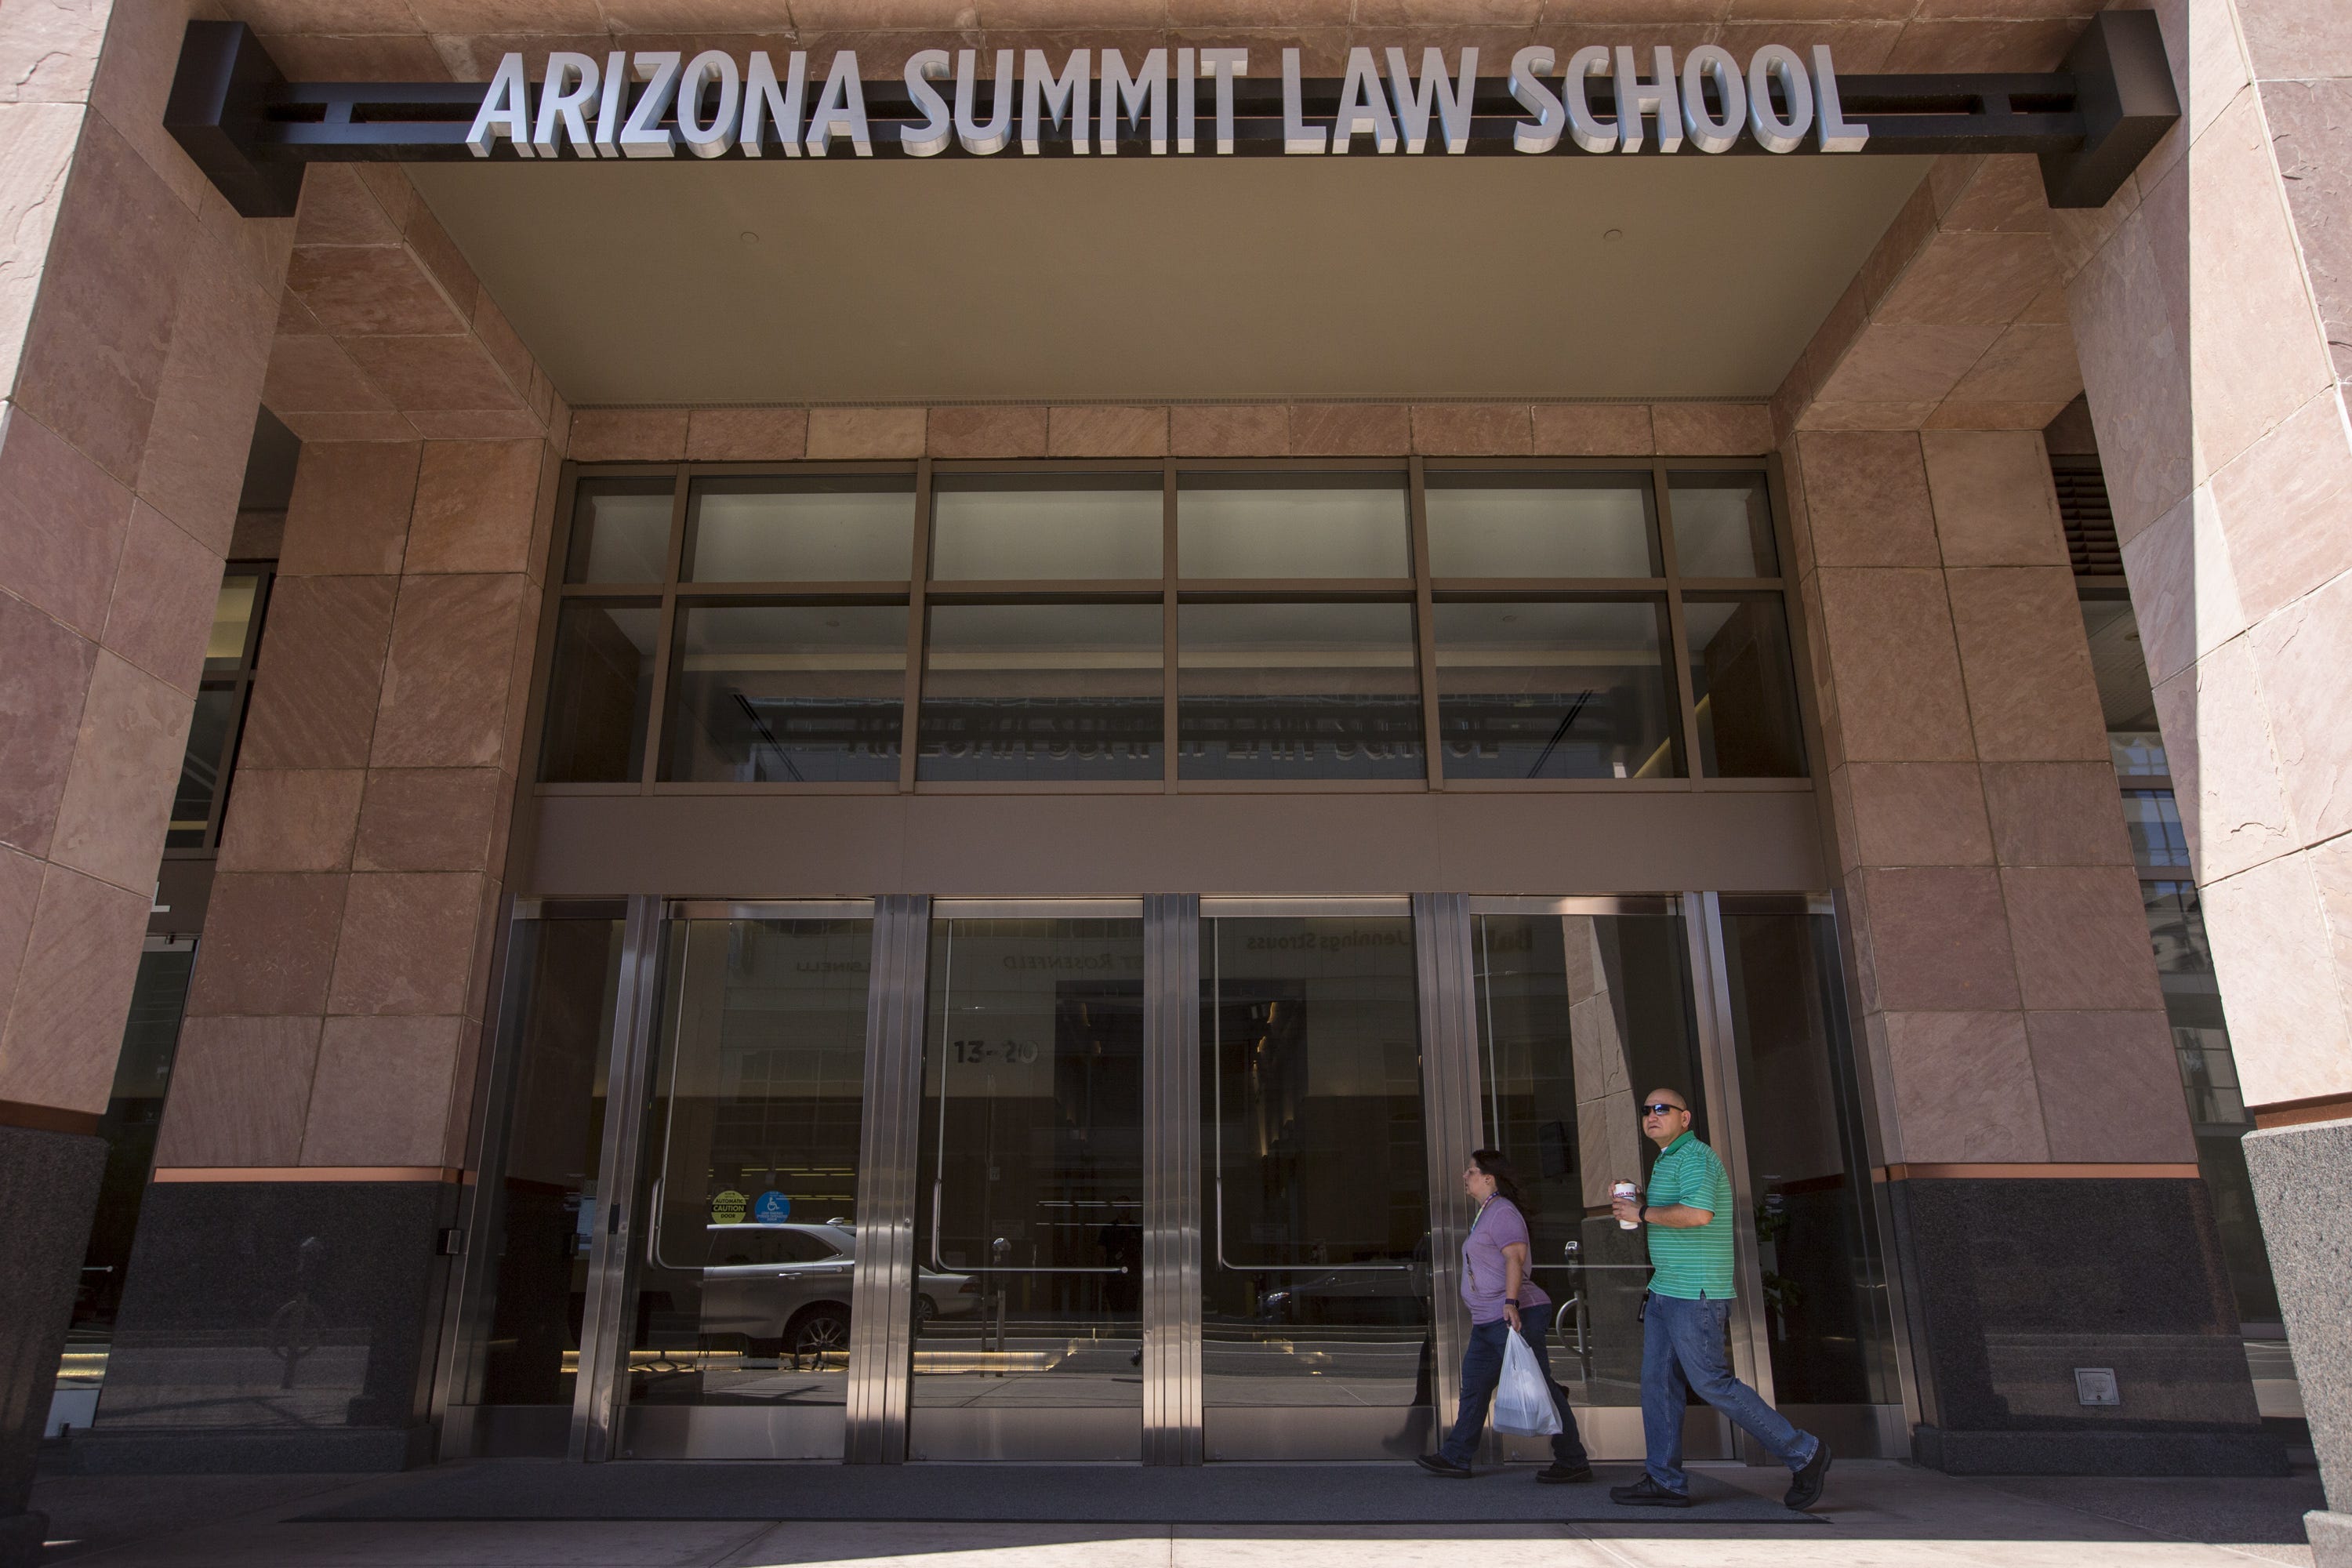 Arizona Summit Law School details plans to close its doors